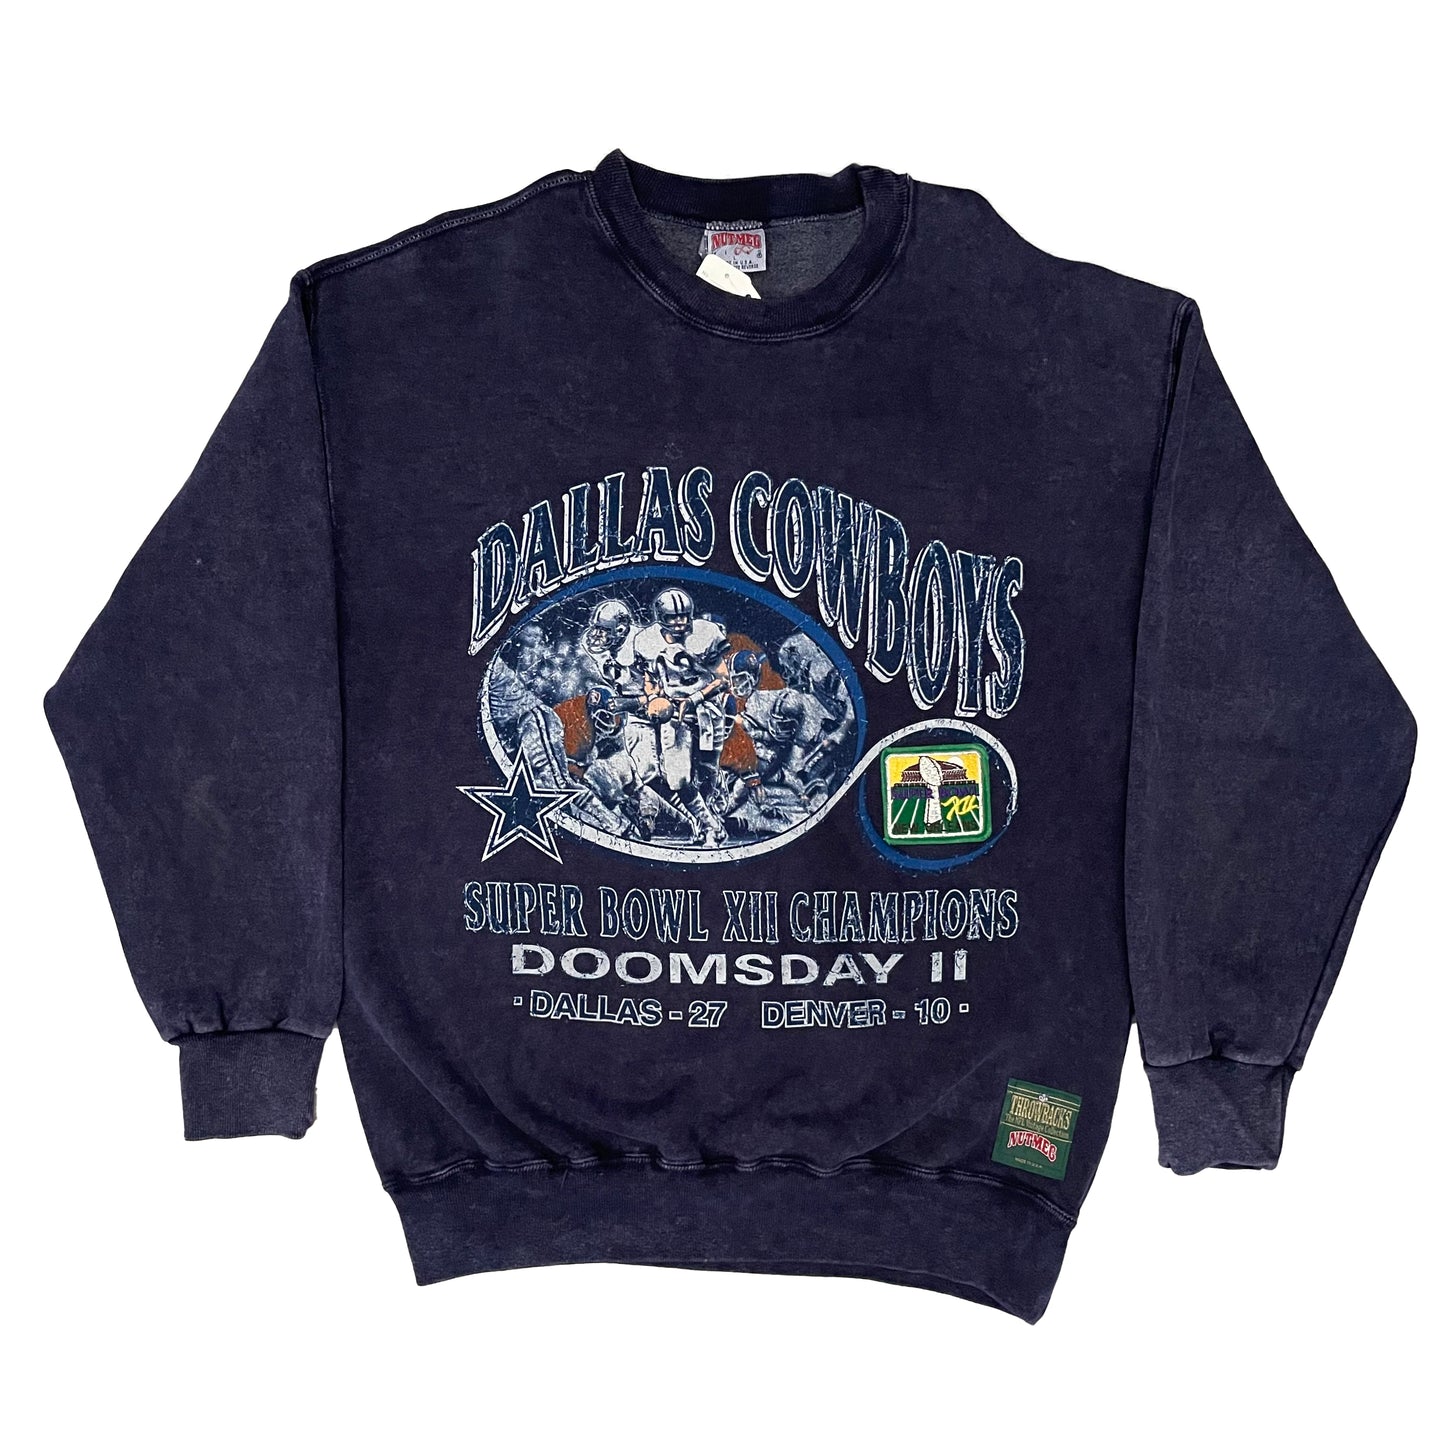 Dallas Cowboys SUPER BOWL XII NUTMEG sweatshirt